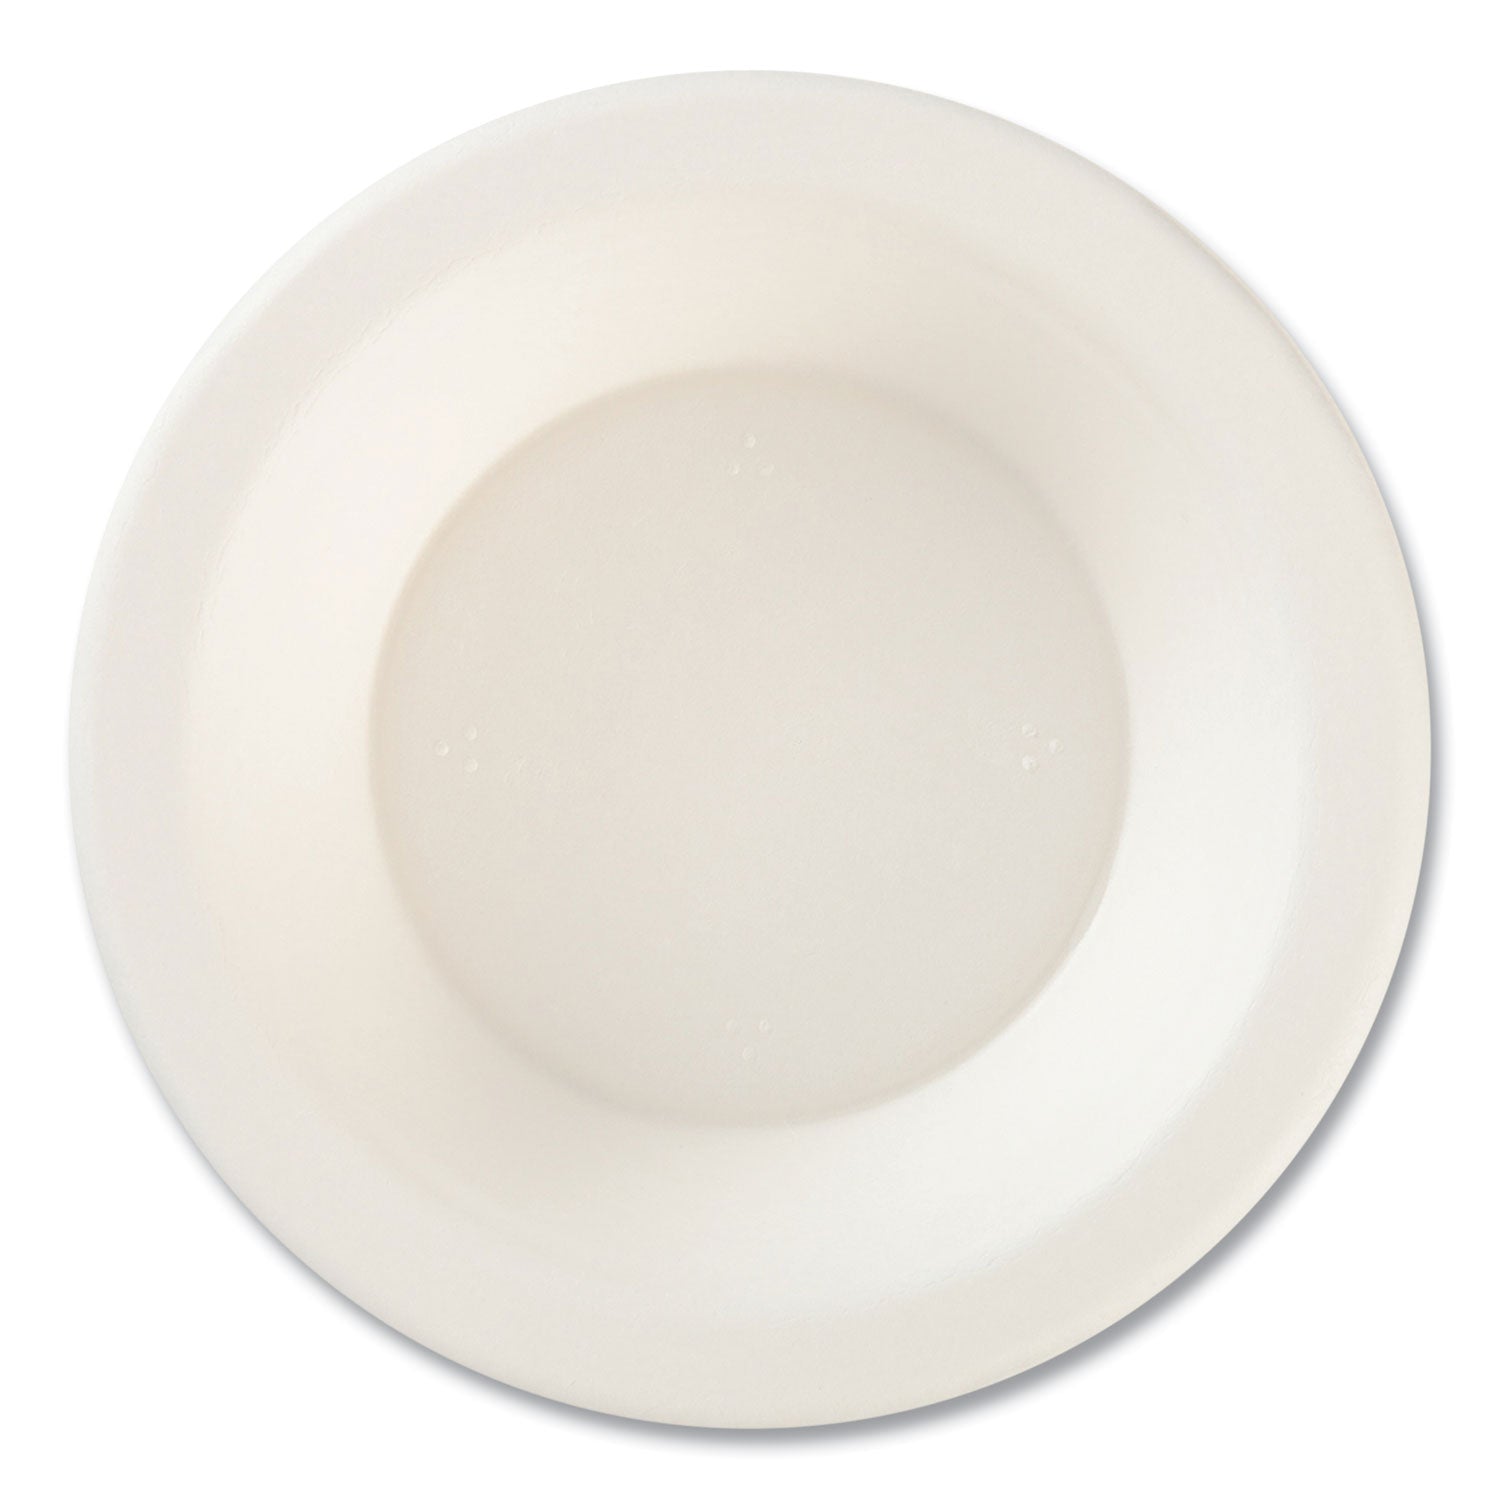 ecosave-tableware-bowl-bagasse-16-oz-white-25-pack-12-packs-carton_rfpd71625 - 2